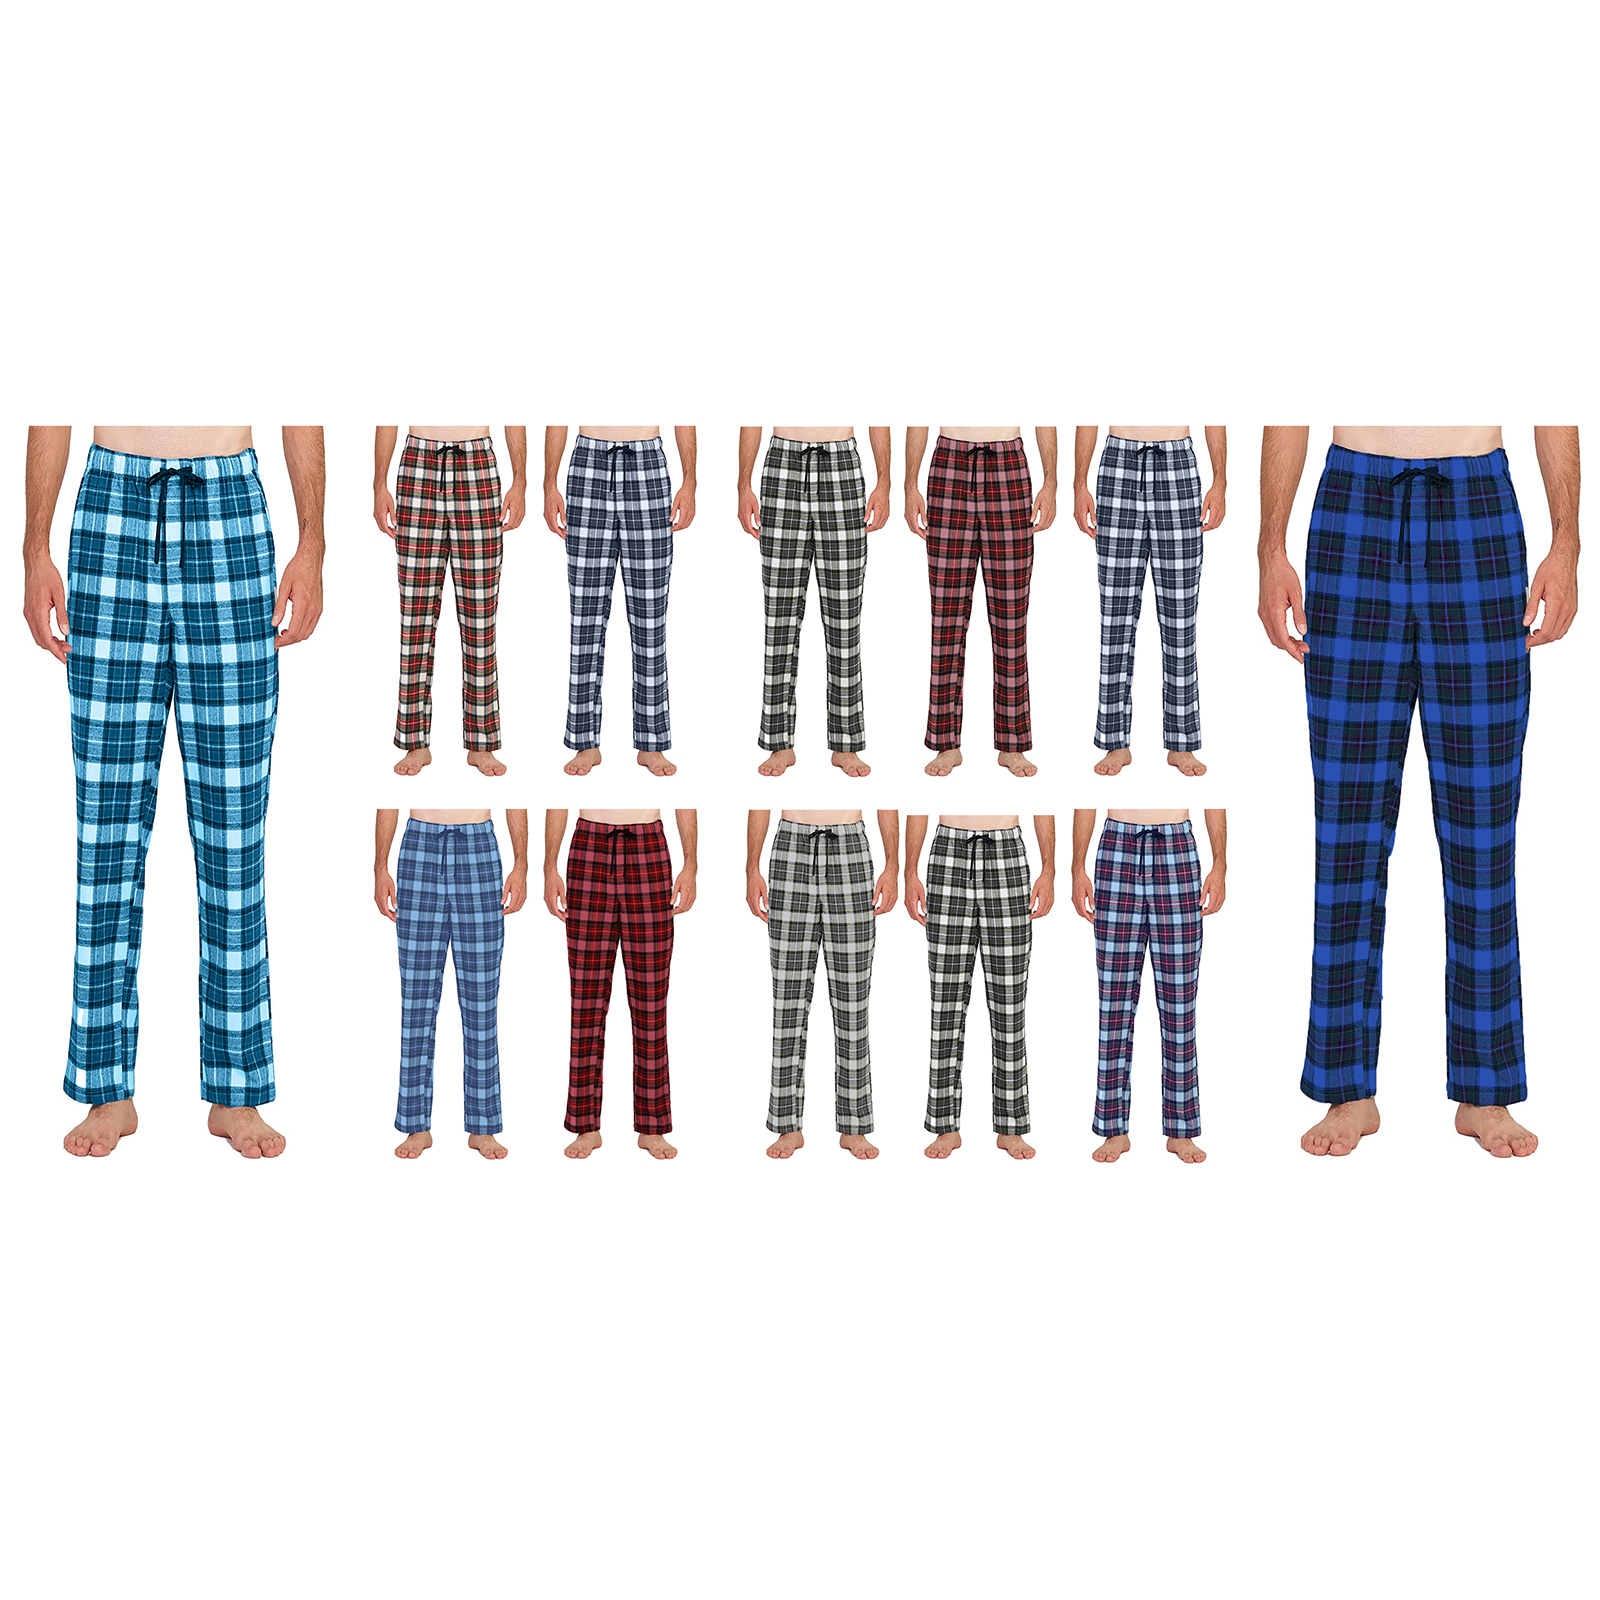 2-Pack: Men's Soft 100% Cotton Flannel Plaid Lounge Pajama Sleep Pants - Large